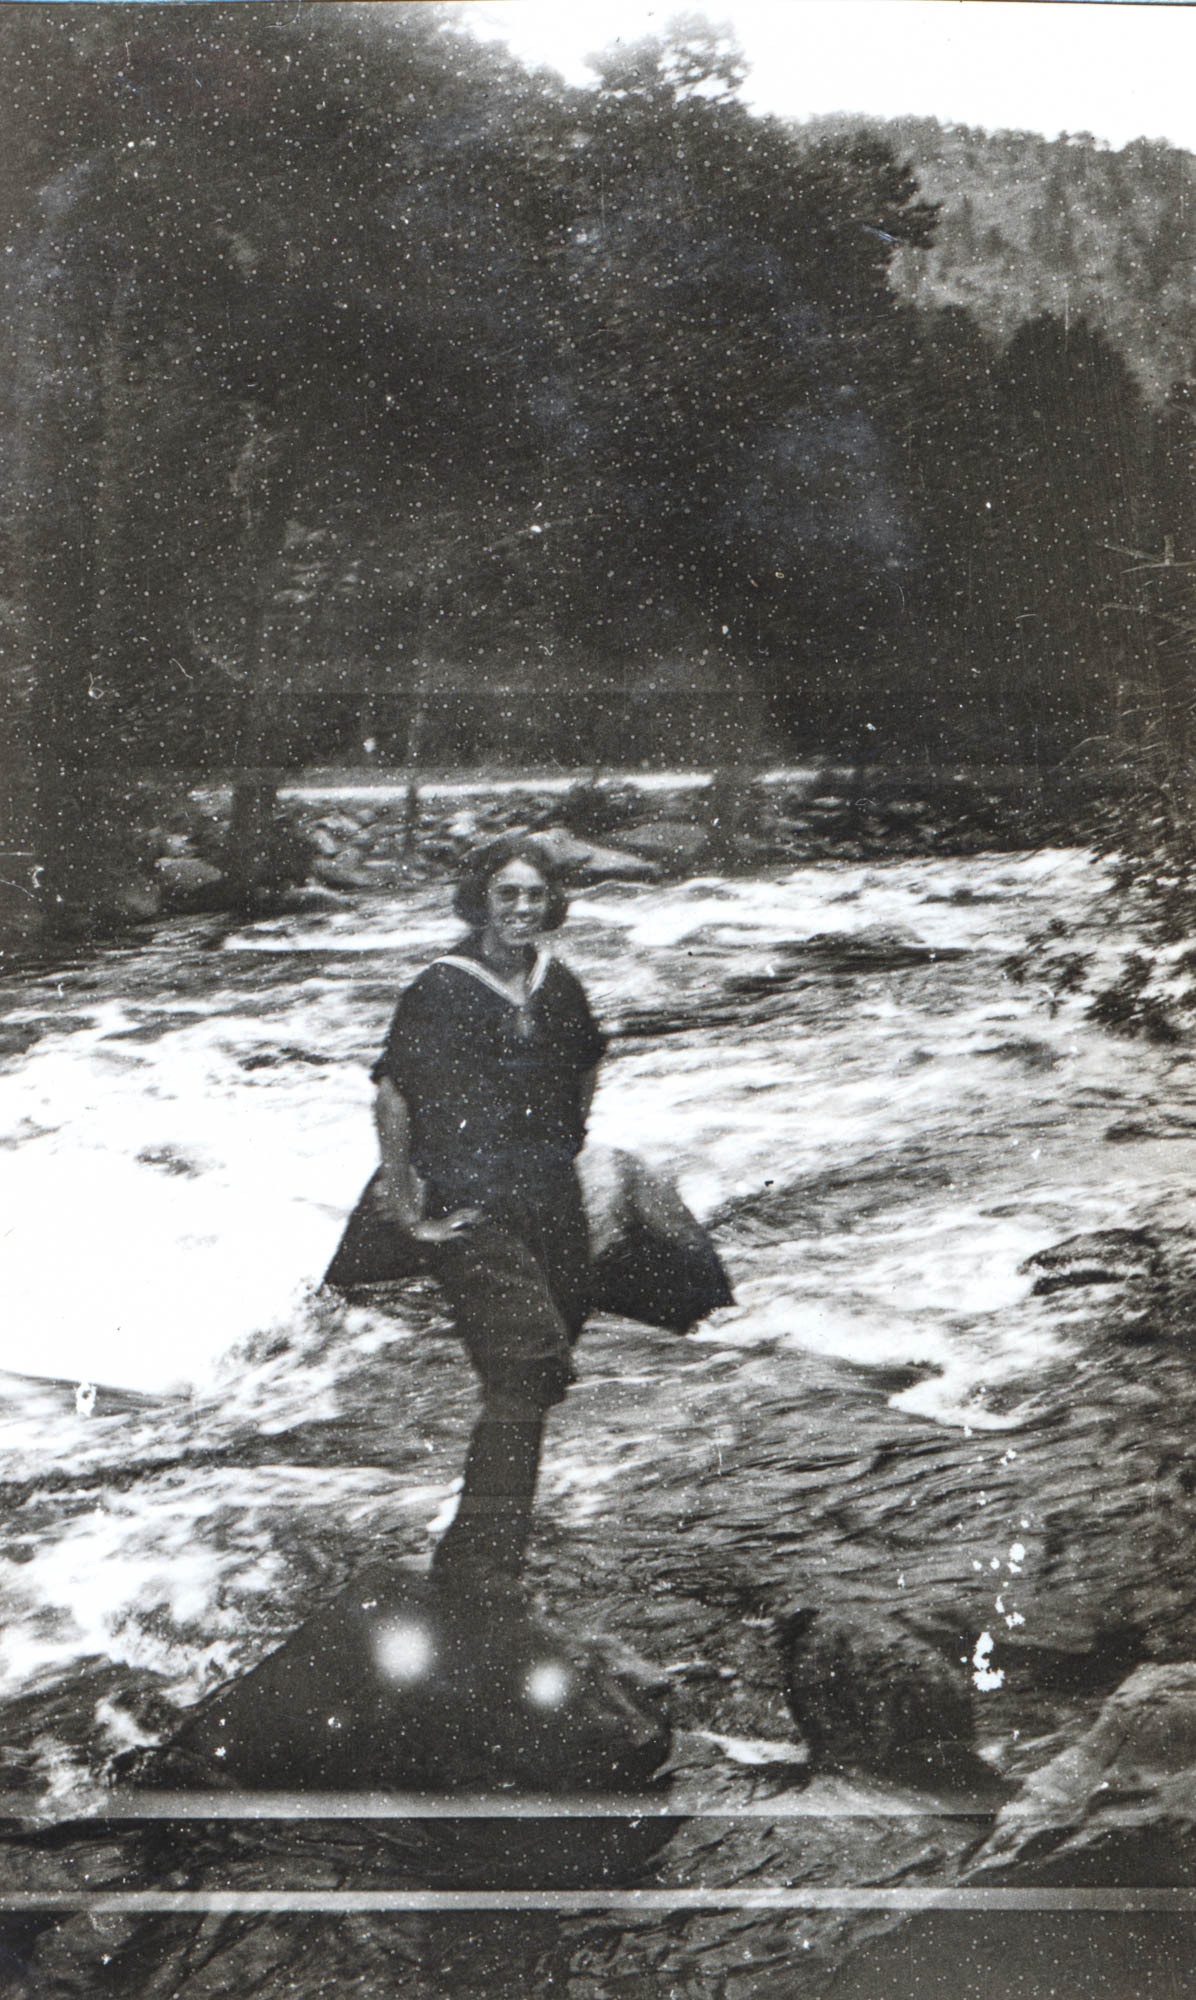 Idlewild Lodge - idlewildlodge.github.io - 1923 - Elizabeth Dauth Hiking In Big Thompson River